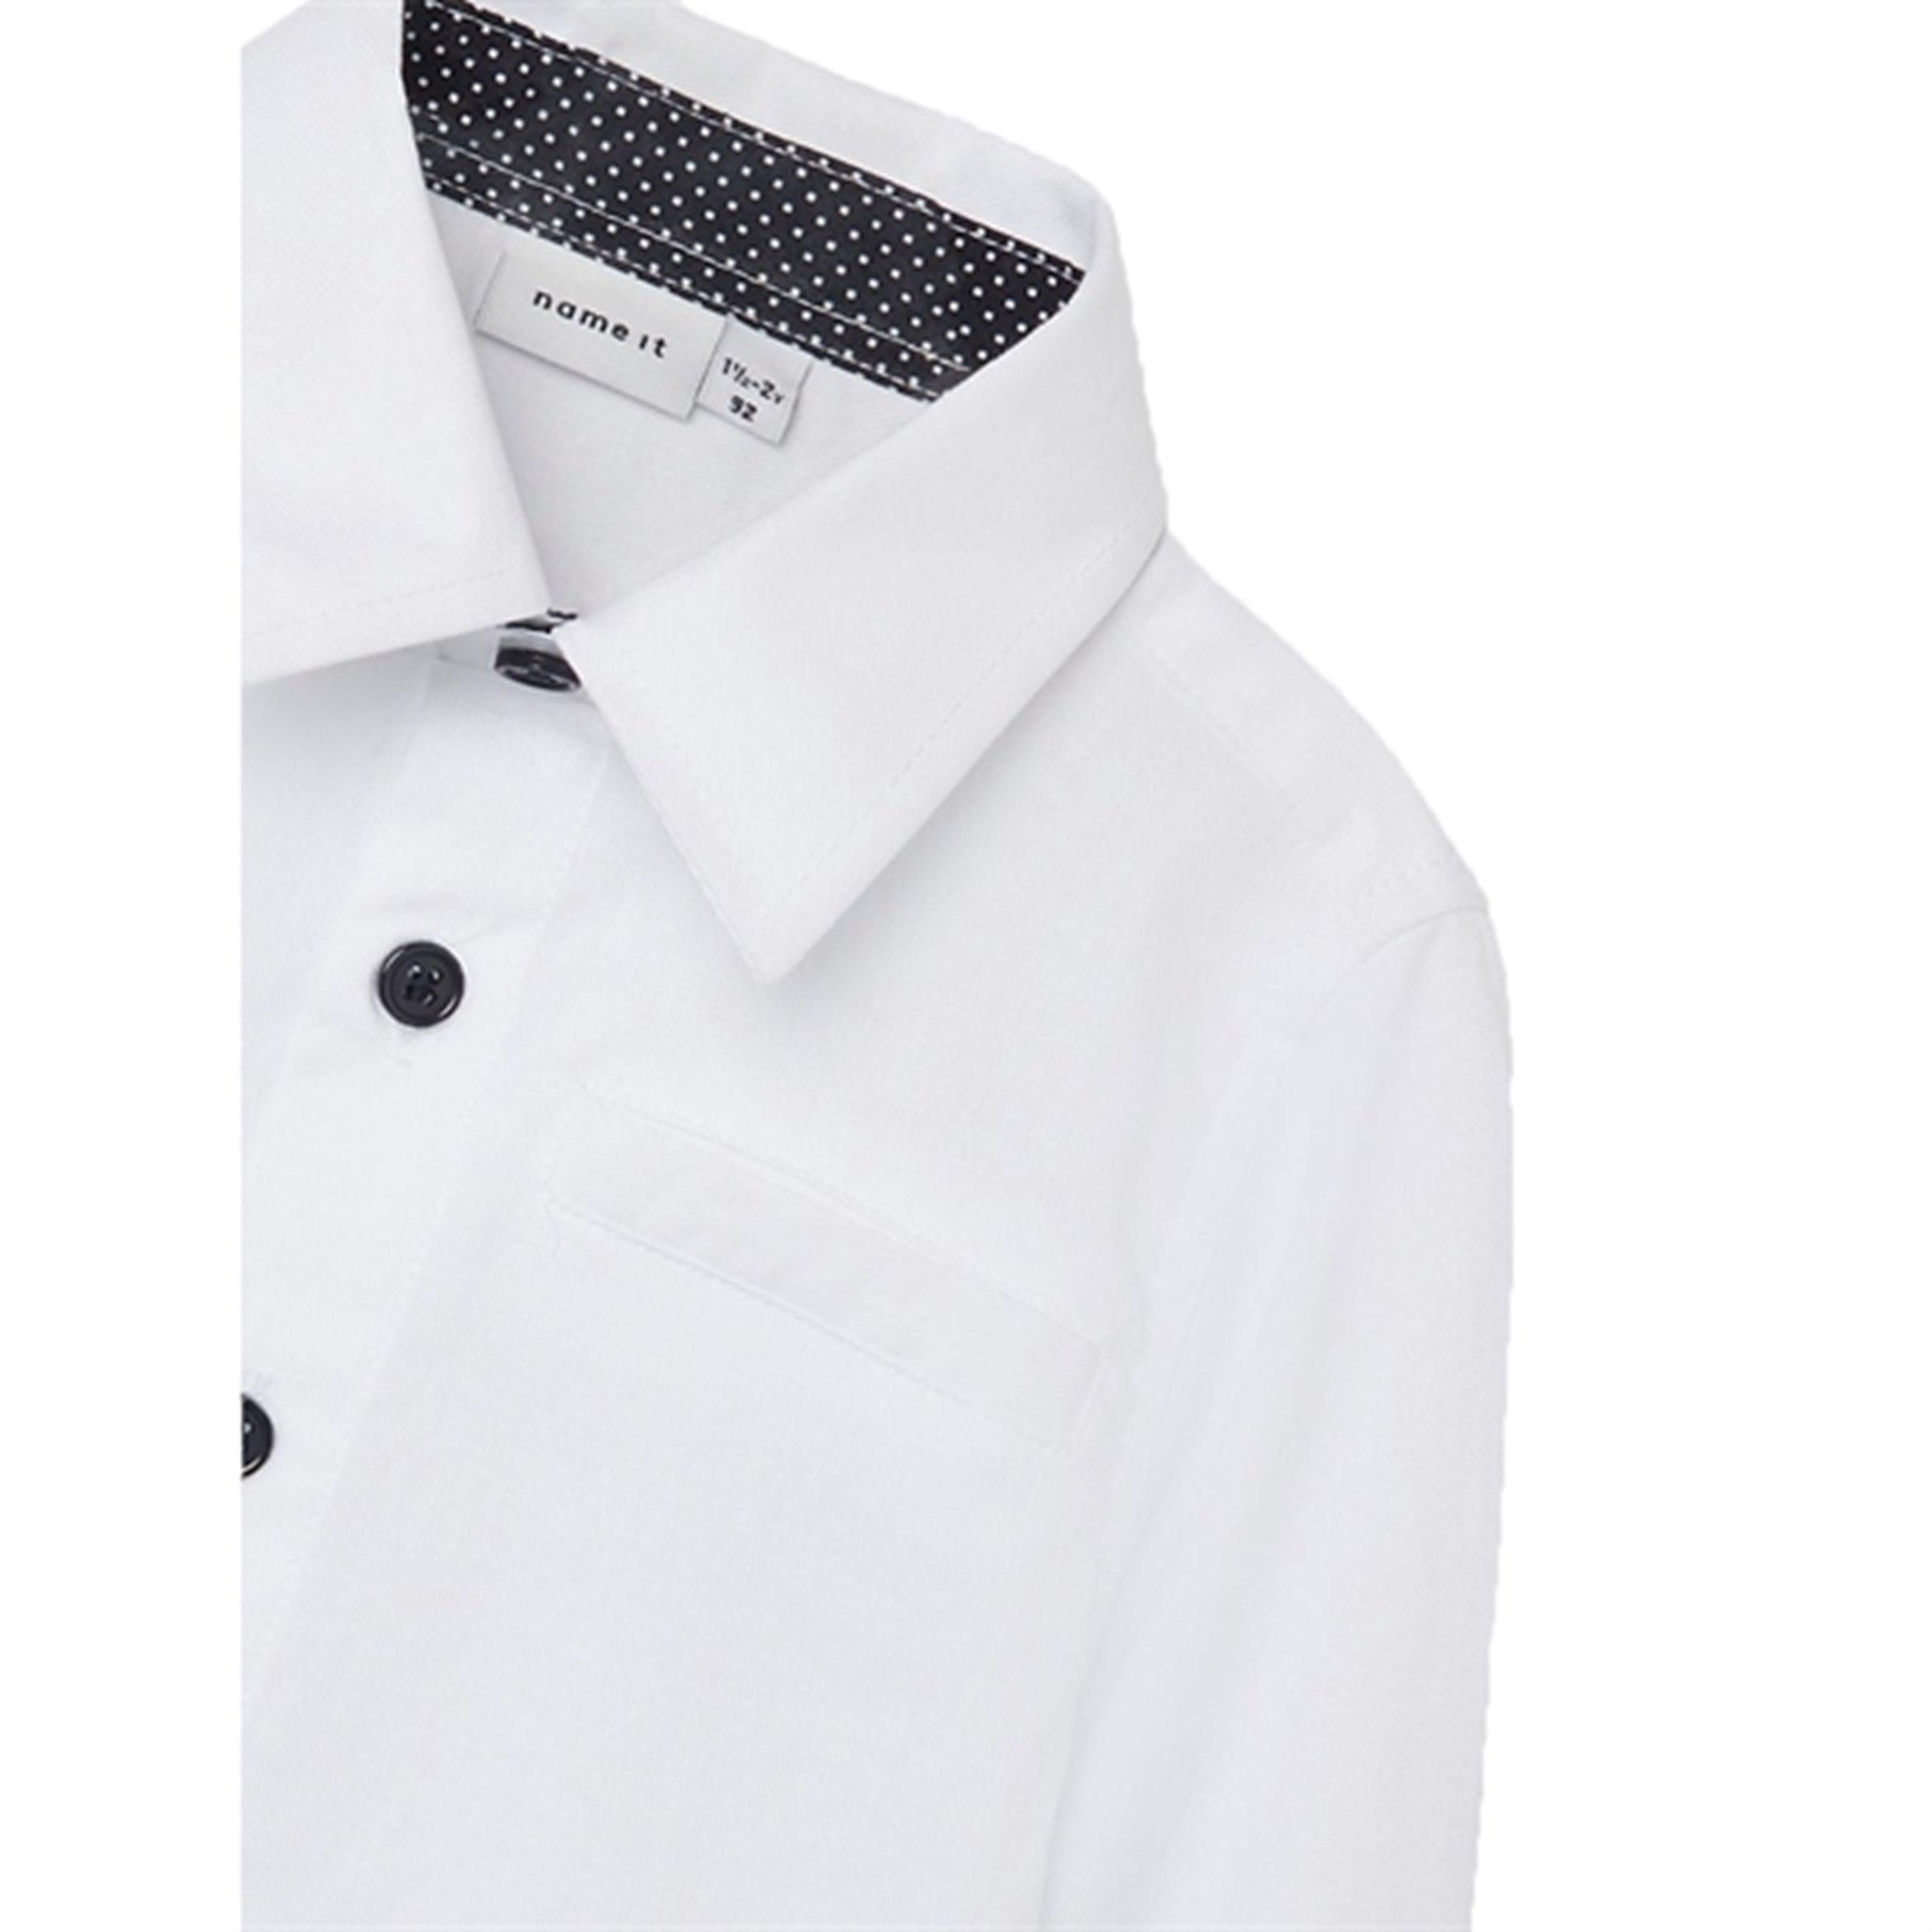 Name it Bright White Feshirt Shirt 3